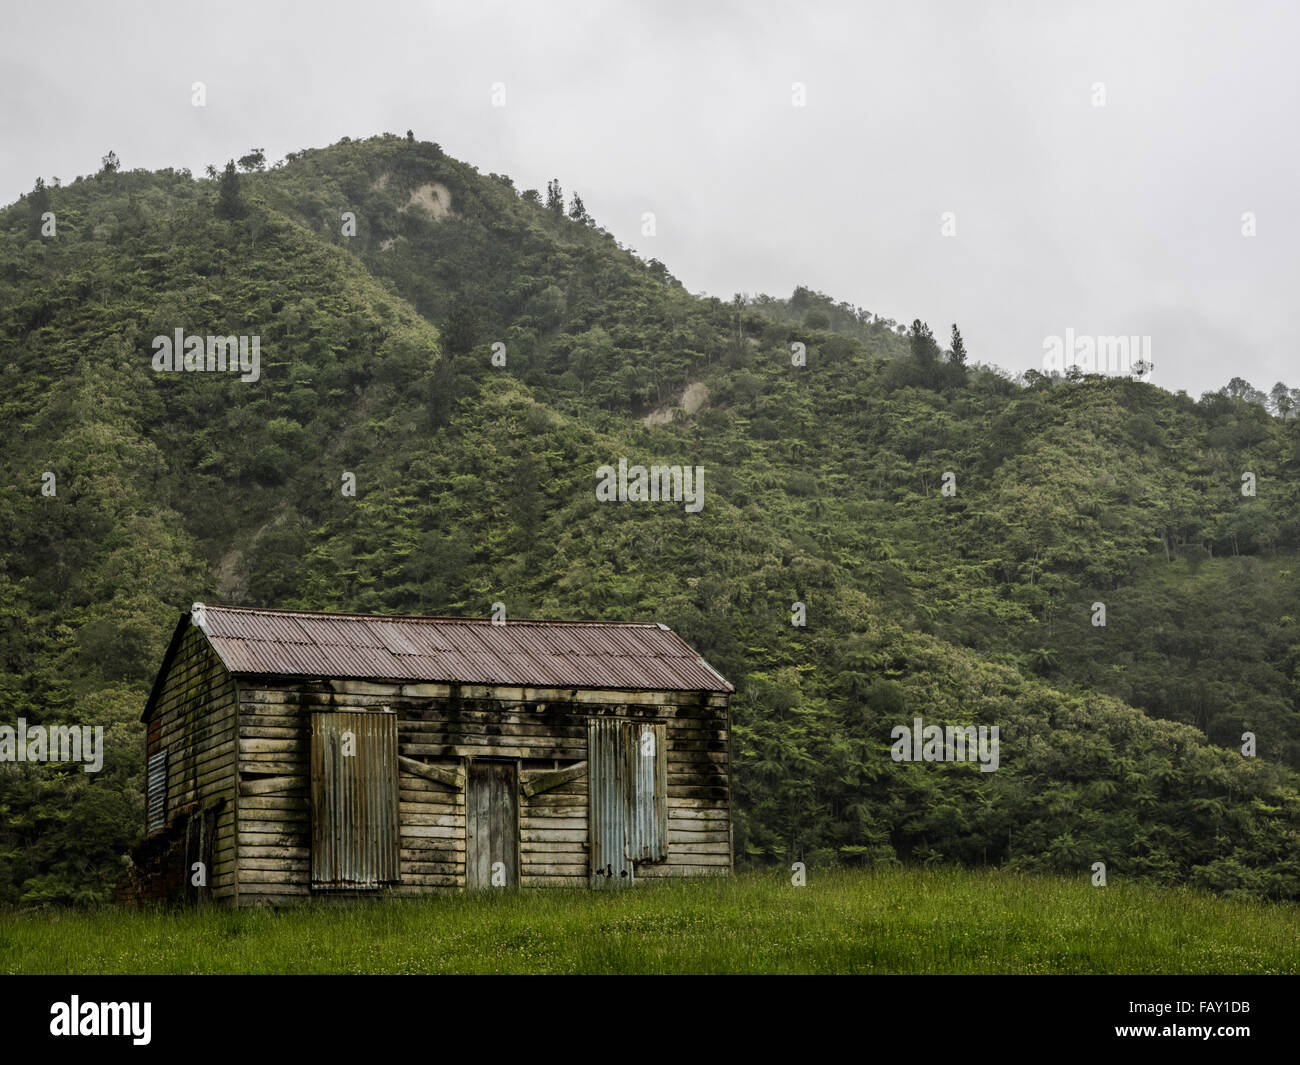 Abandoned house with regenerating forest on hills, Rotorangi, Patea Valley, South Taranaki Stock Photo